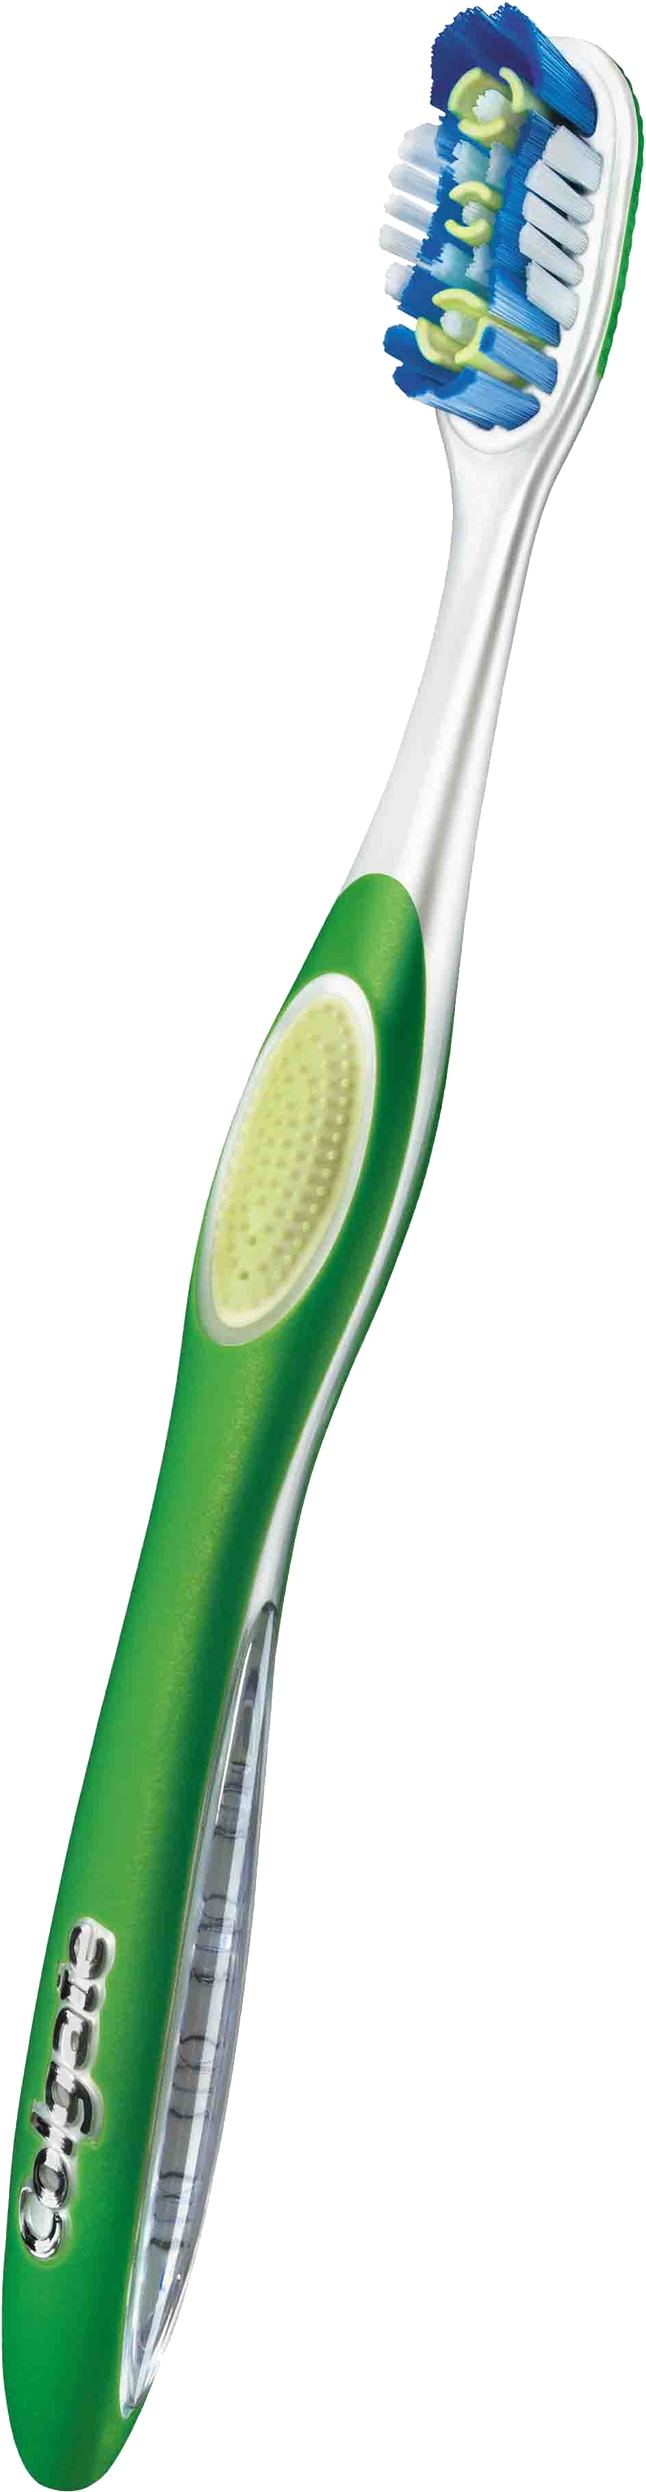 Toothbrush PNG-PlusPNG.com-64